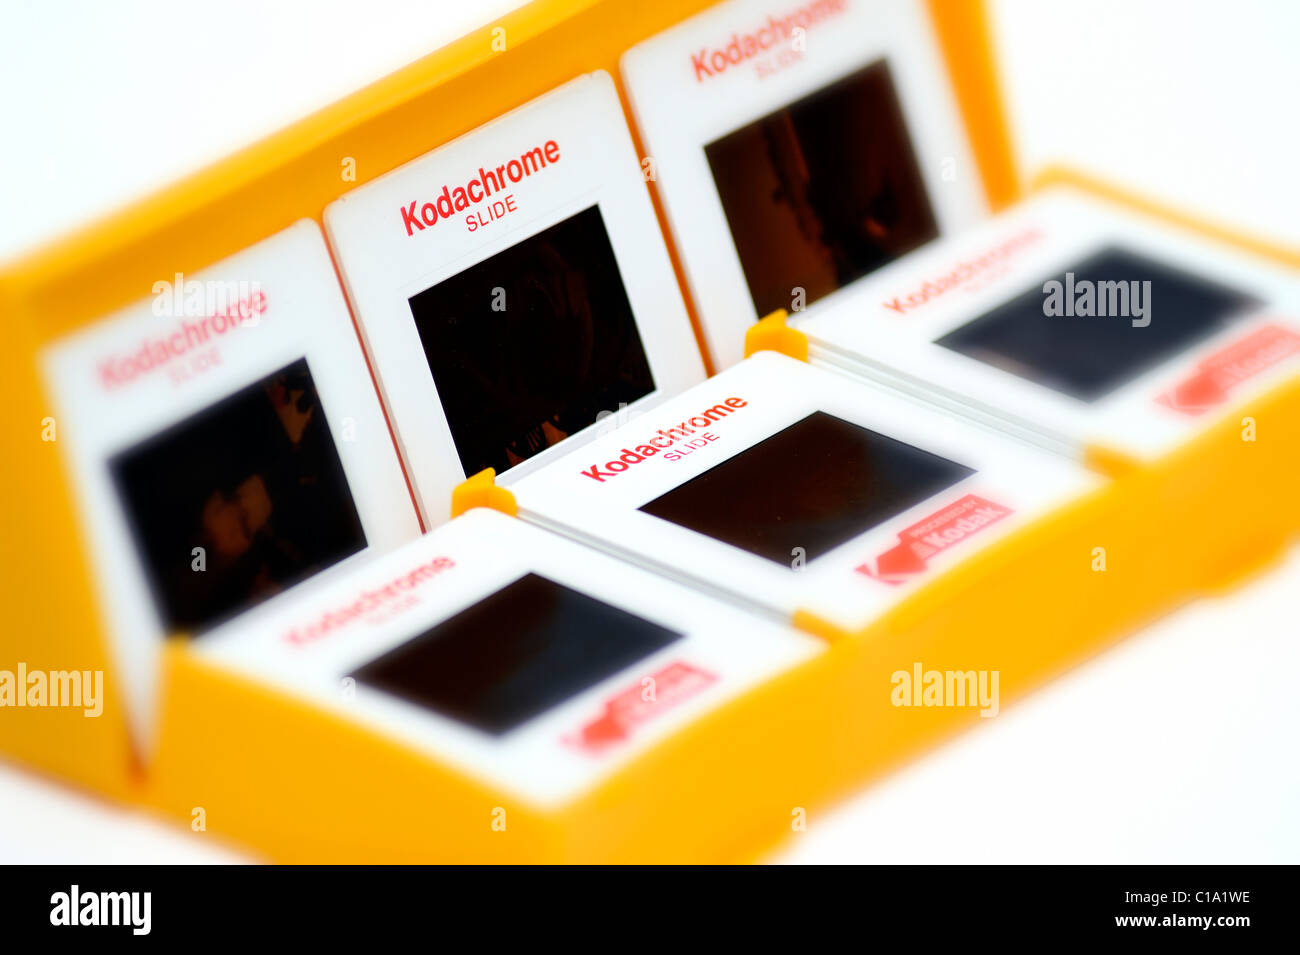 Kodak kodachrome 64 hi-res stock photography and images - Alamy